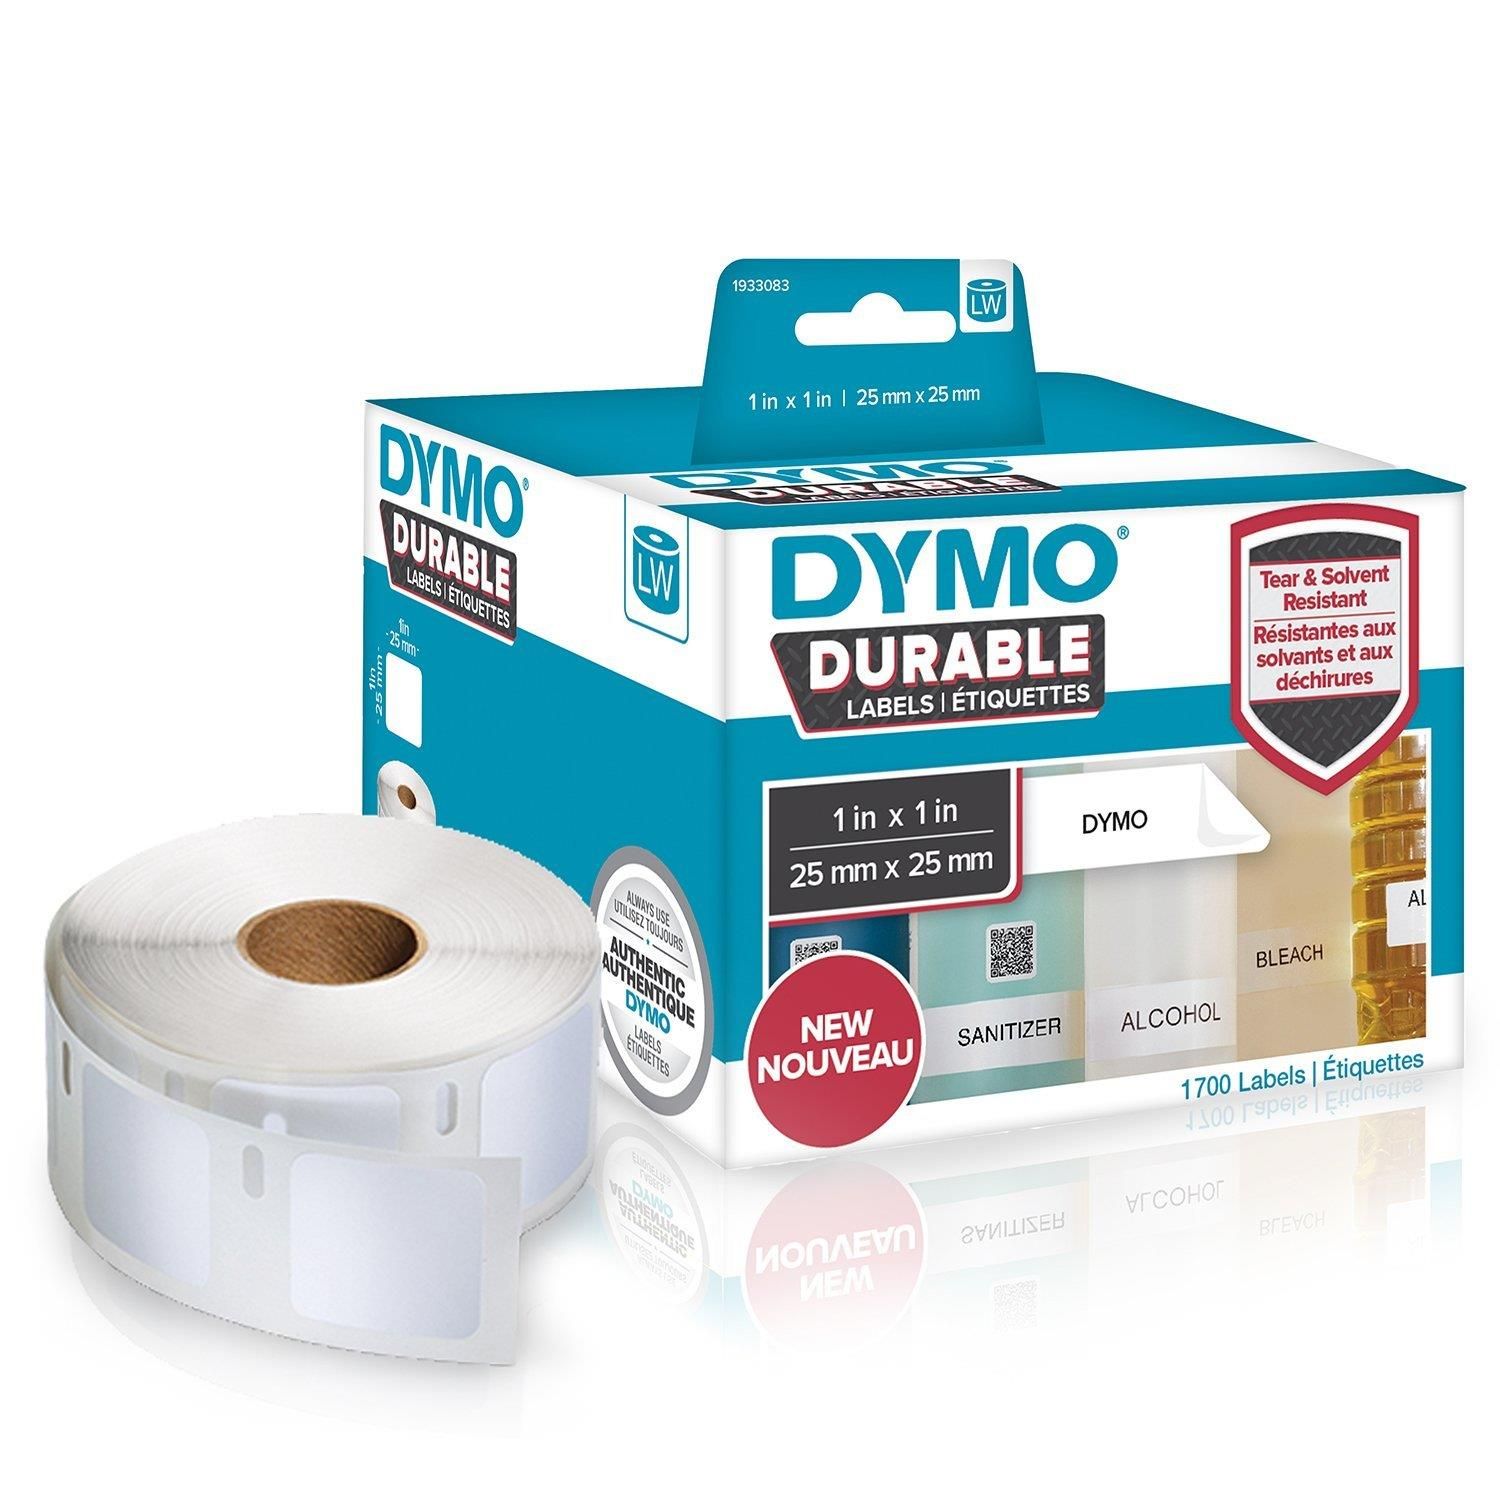 DYMO Etichette Lw Durable